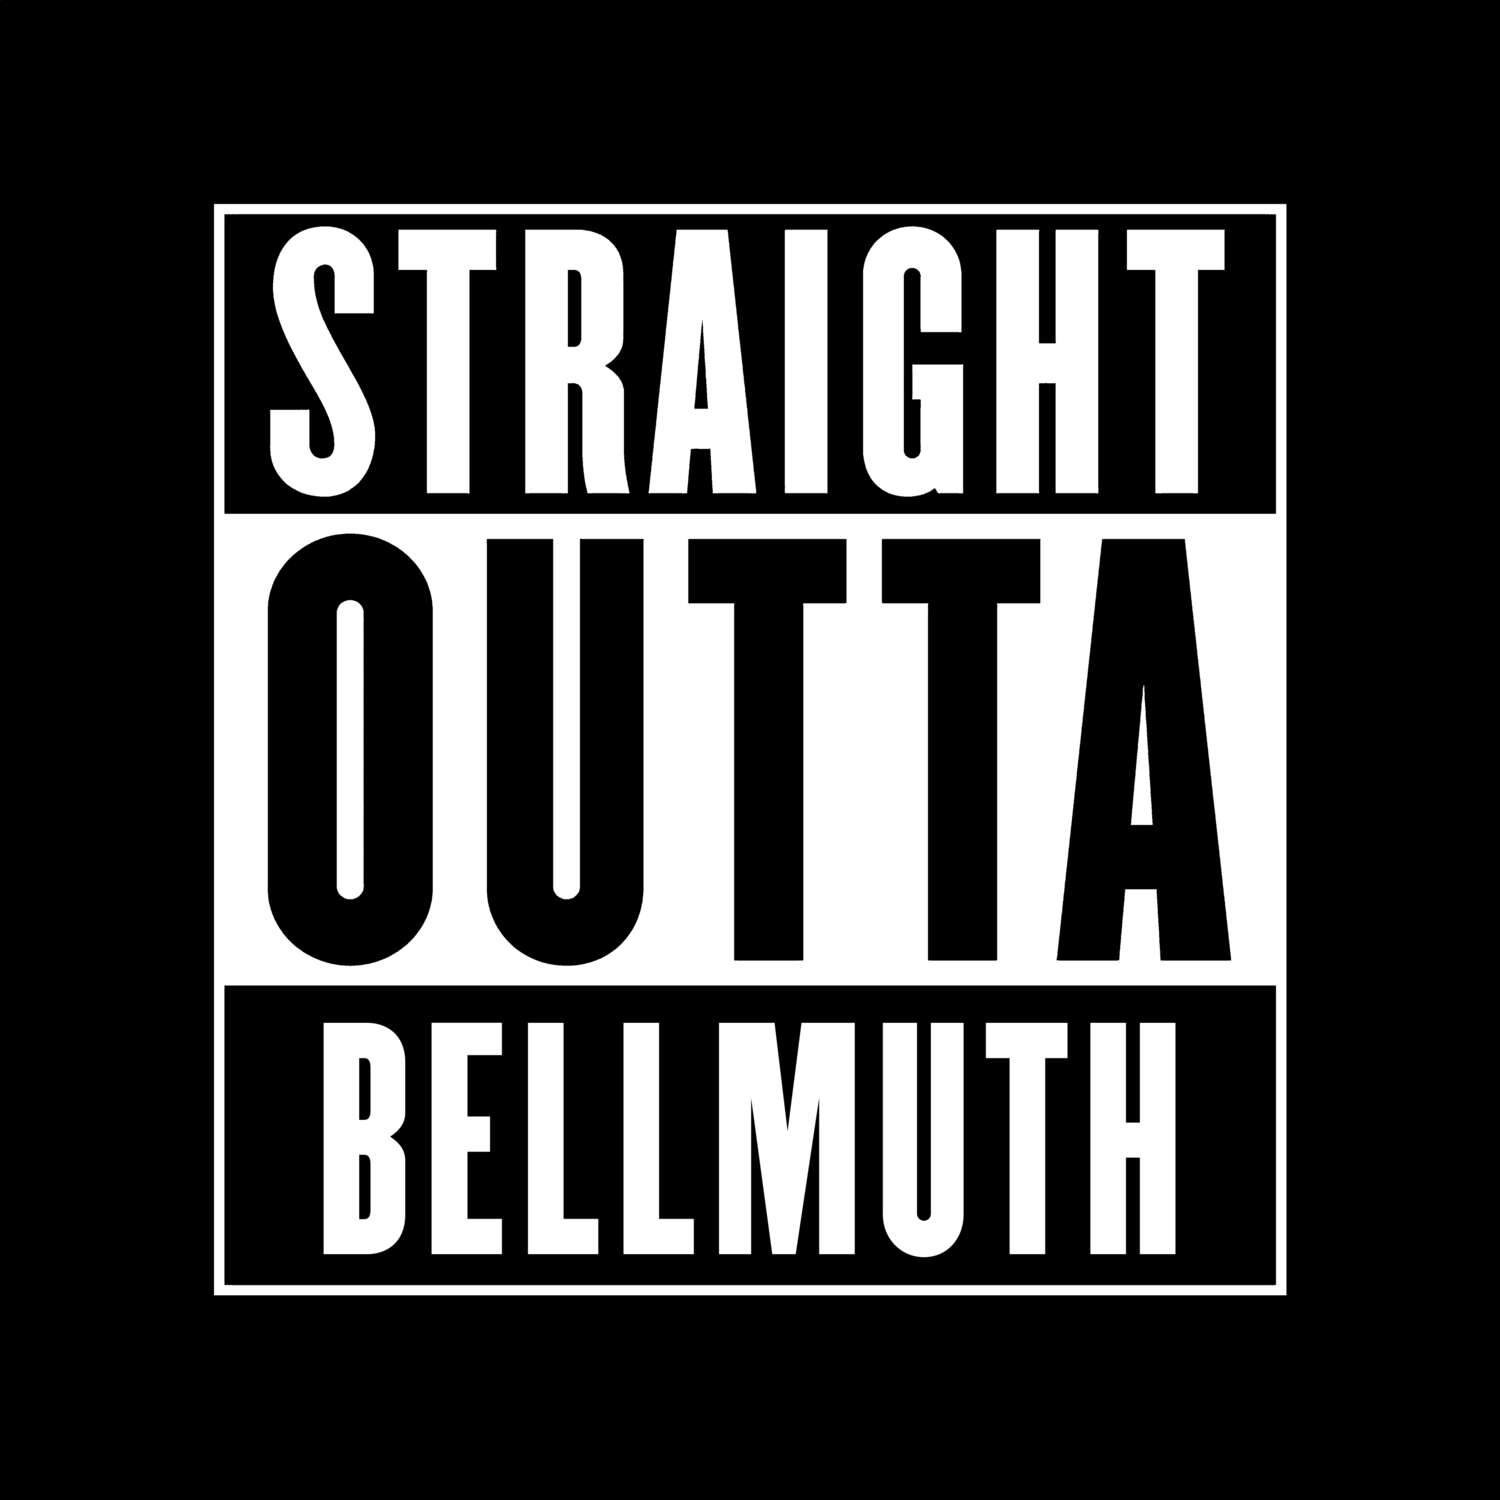 Bellmuth T-Shirt »Straight Outta«